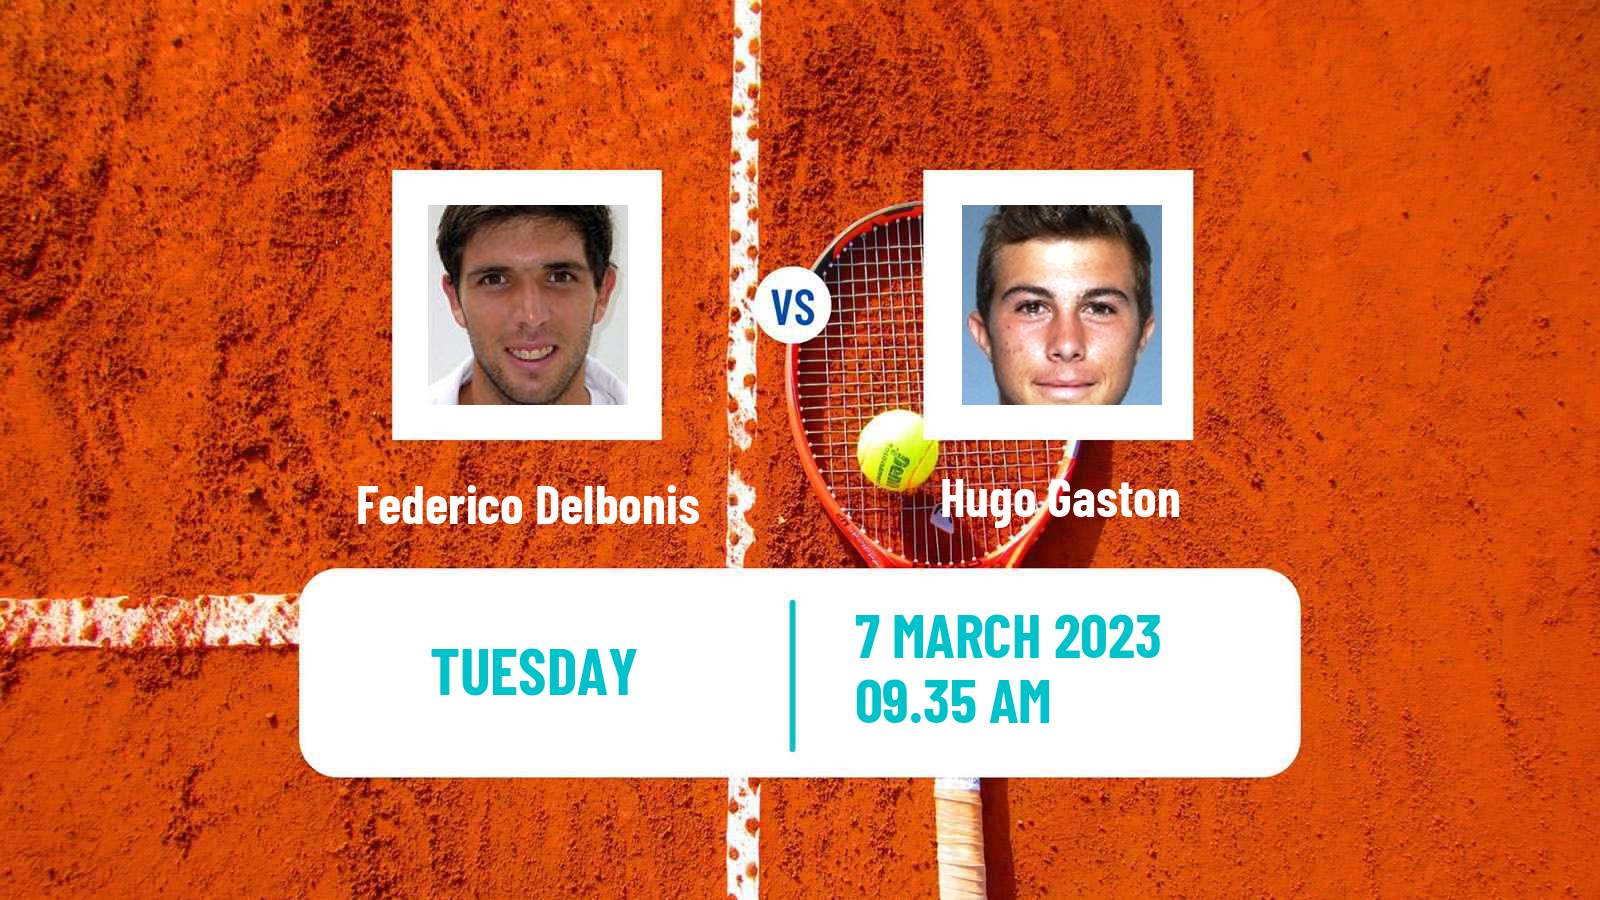 Tennis ATP Challenger Federico Delbonis - Hugo Gaston